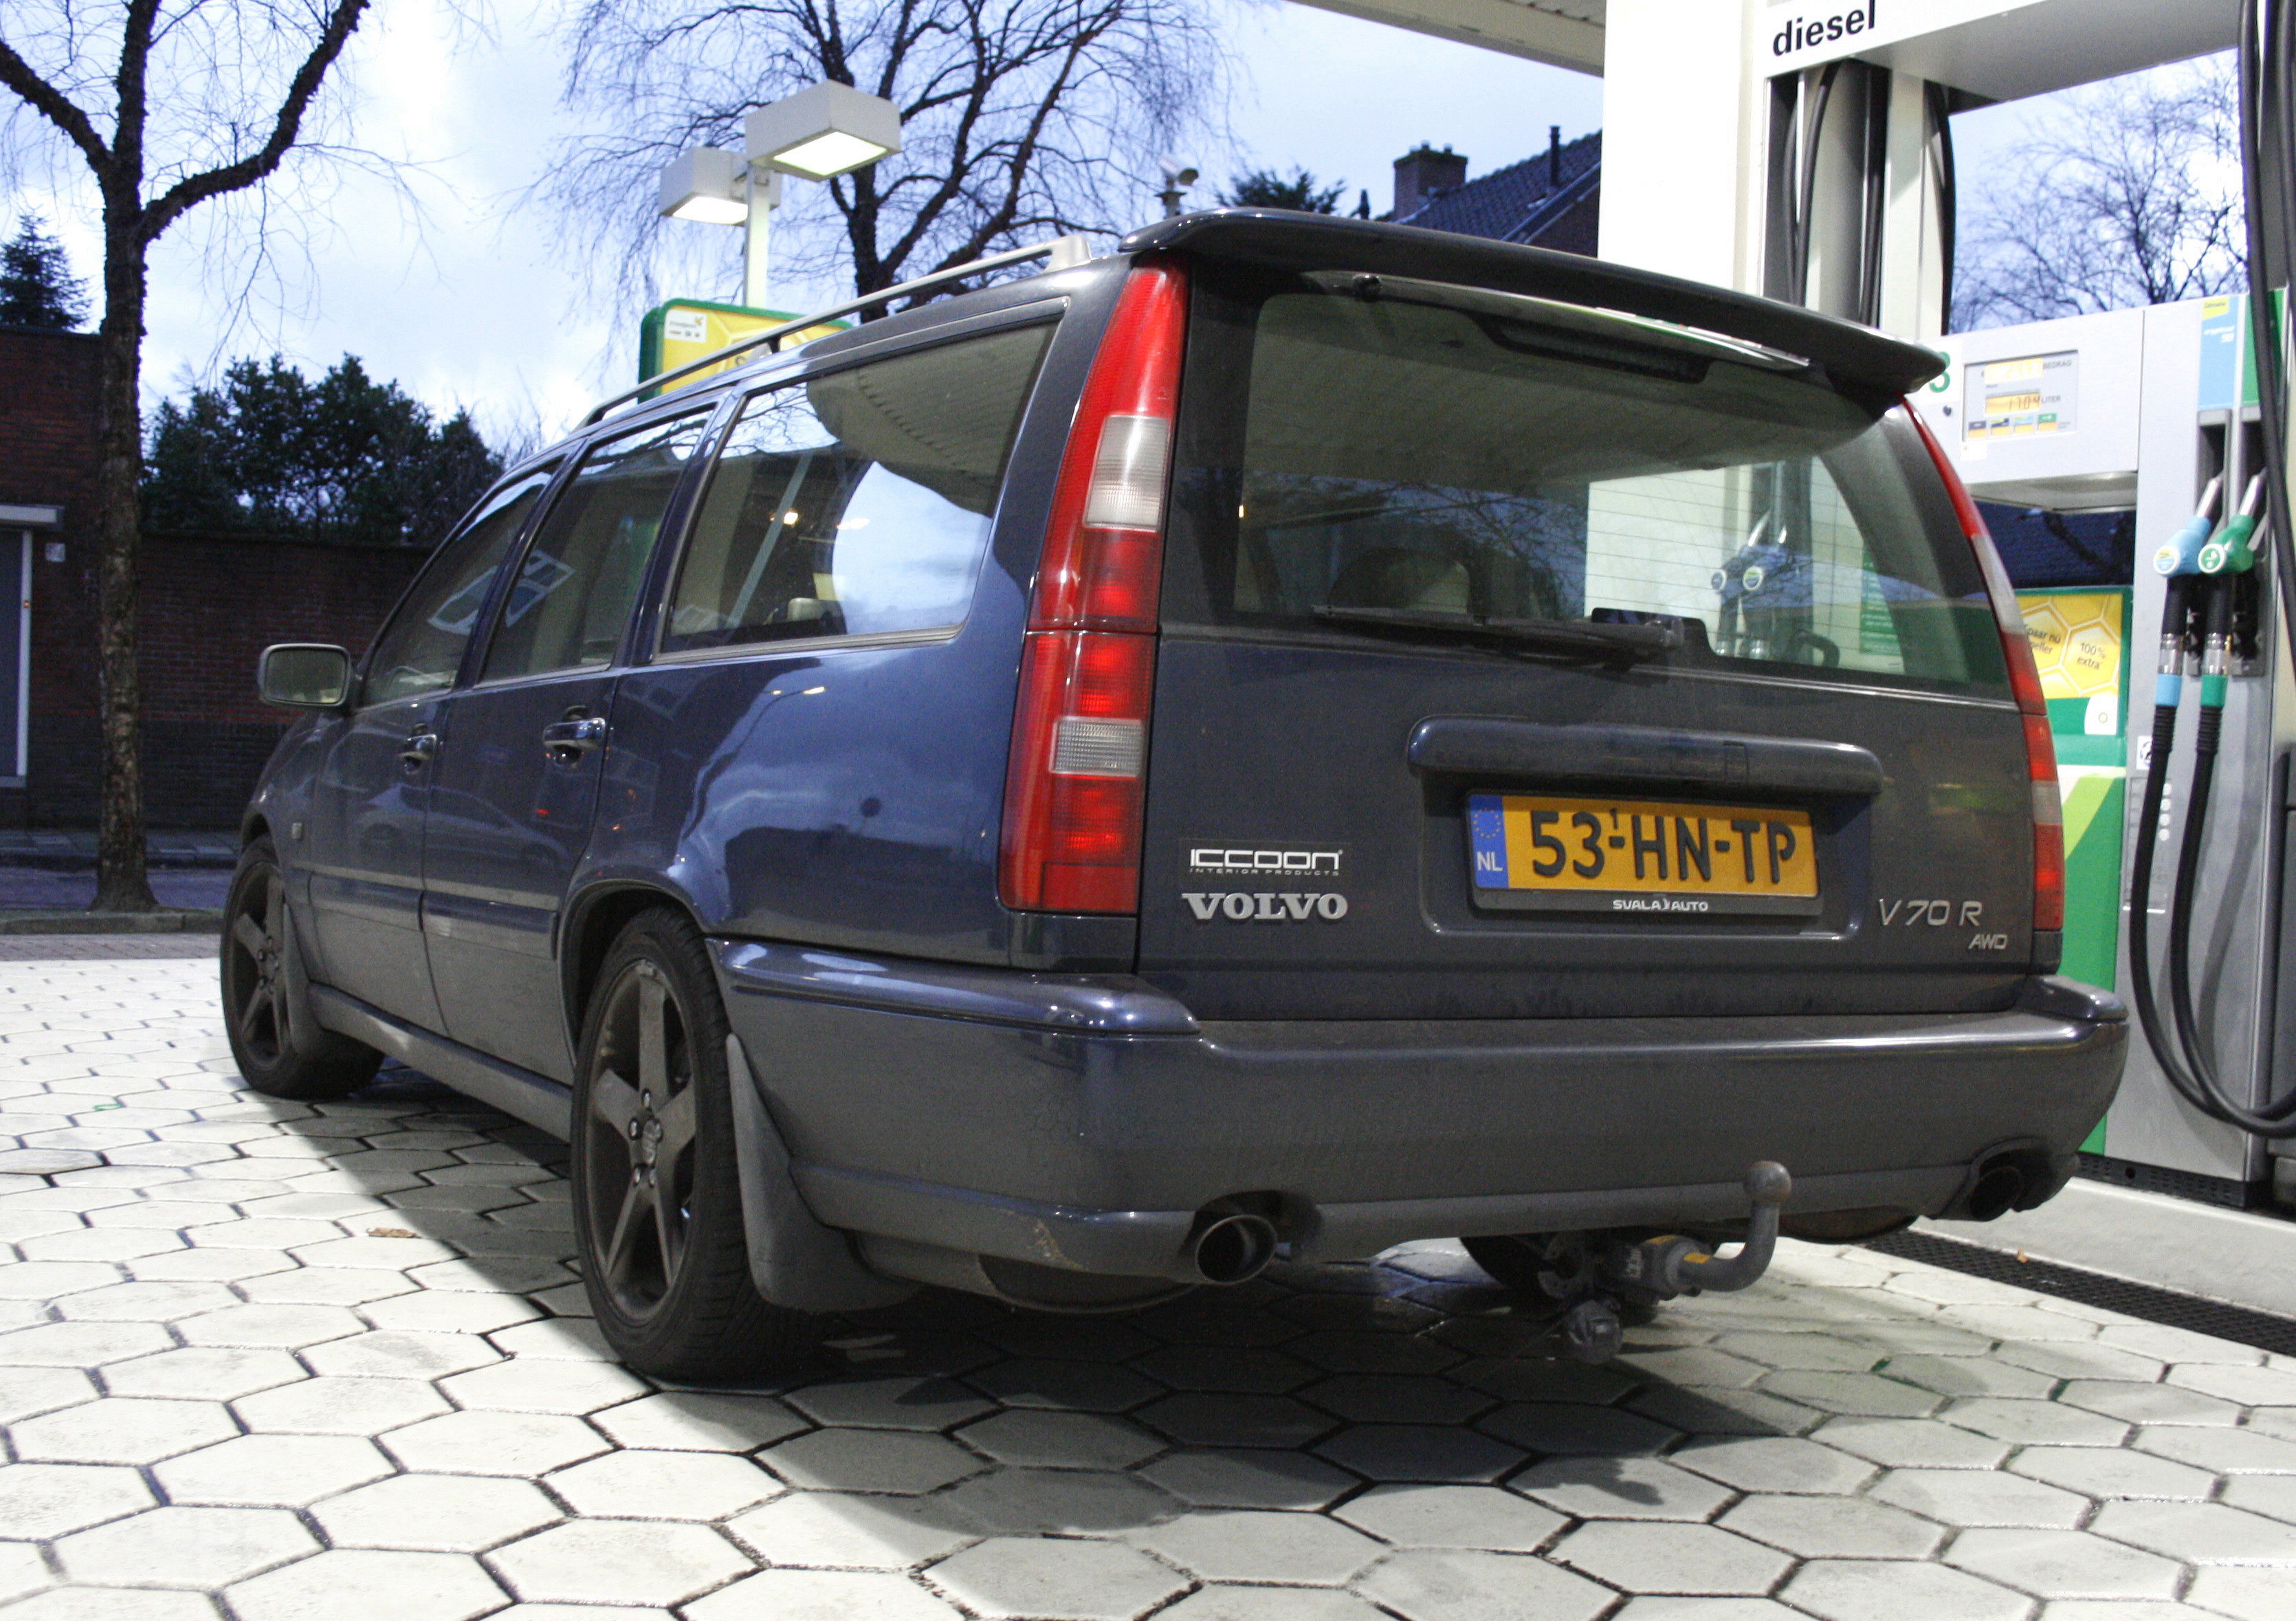 Volvo V70 R AWD Automatic | Flickr - Photo Sharing!